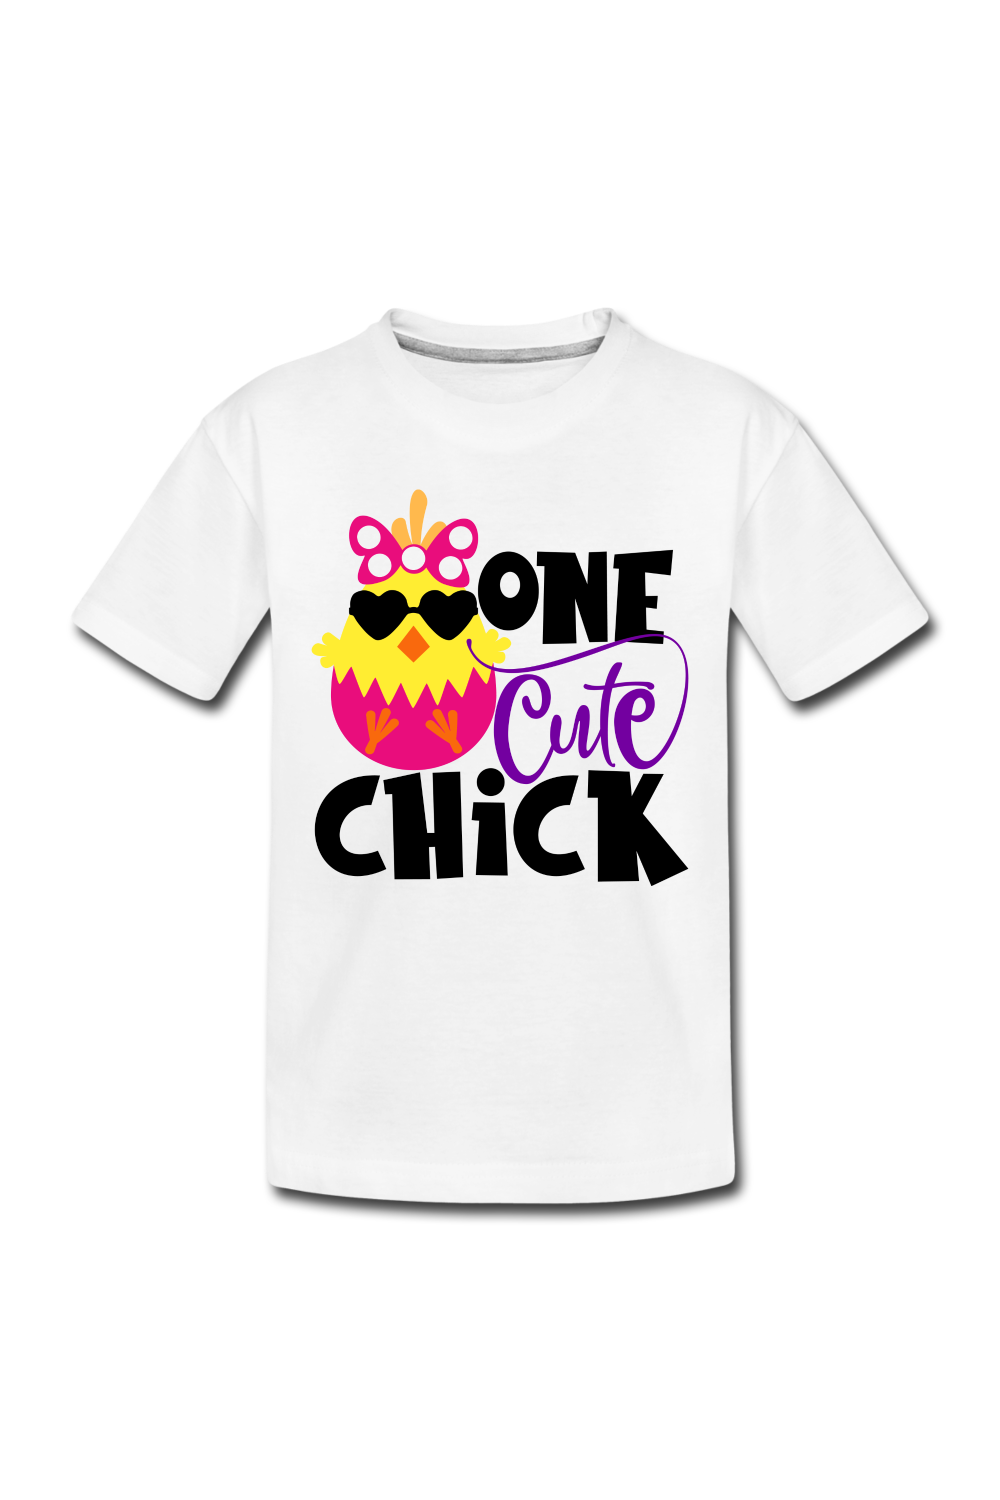 Girls Cute Chick Easter Short Sleeve T-Shirt - white